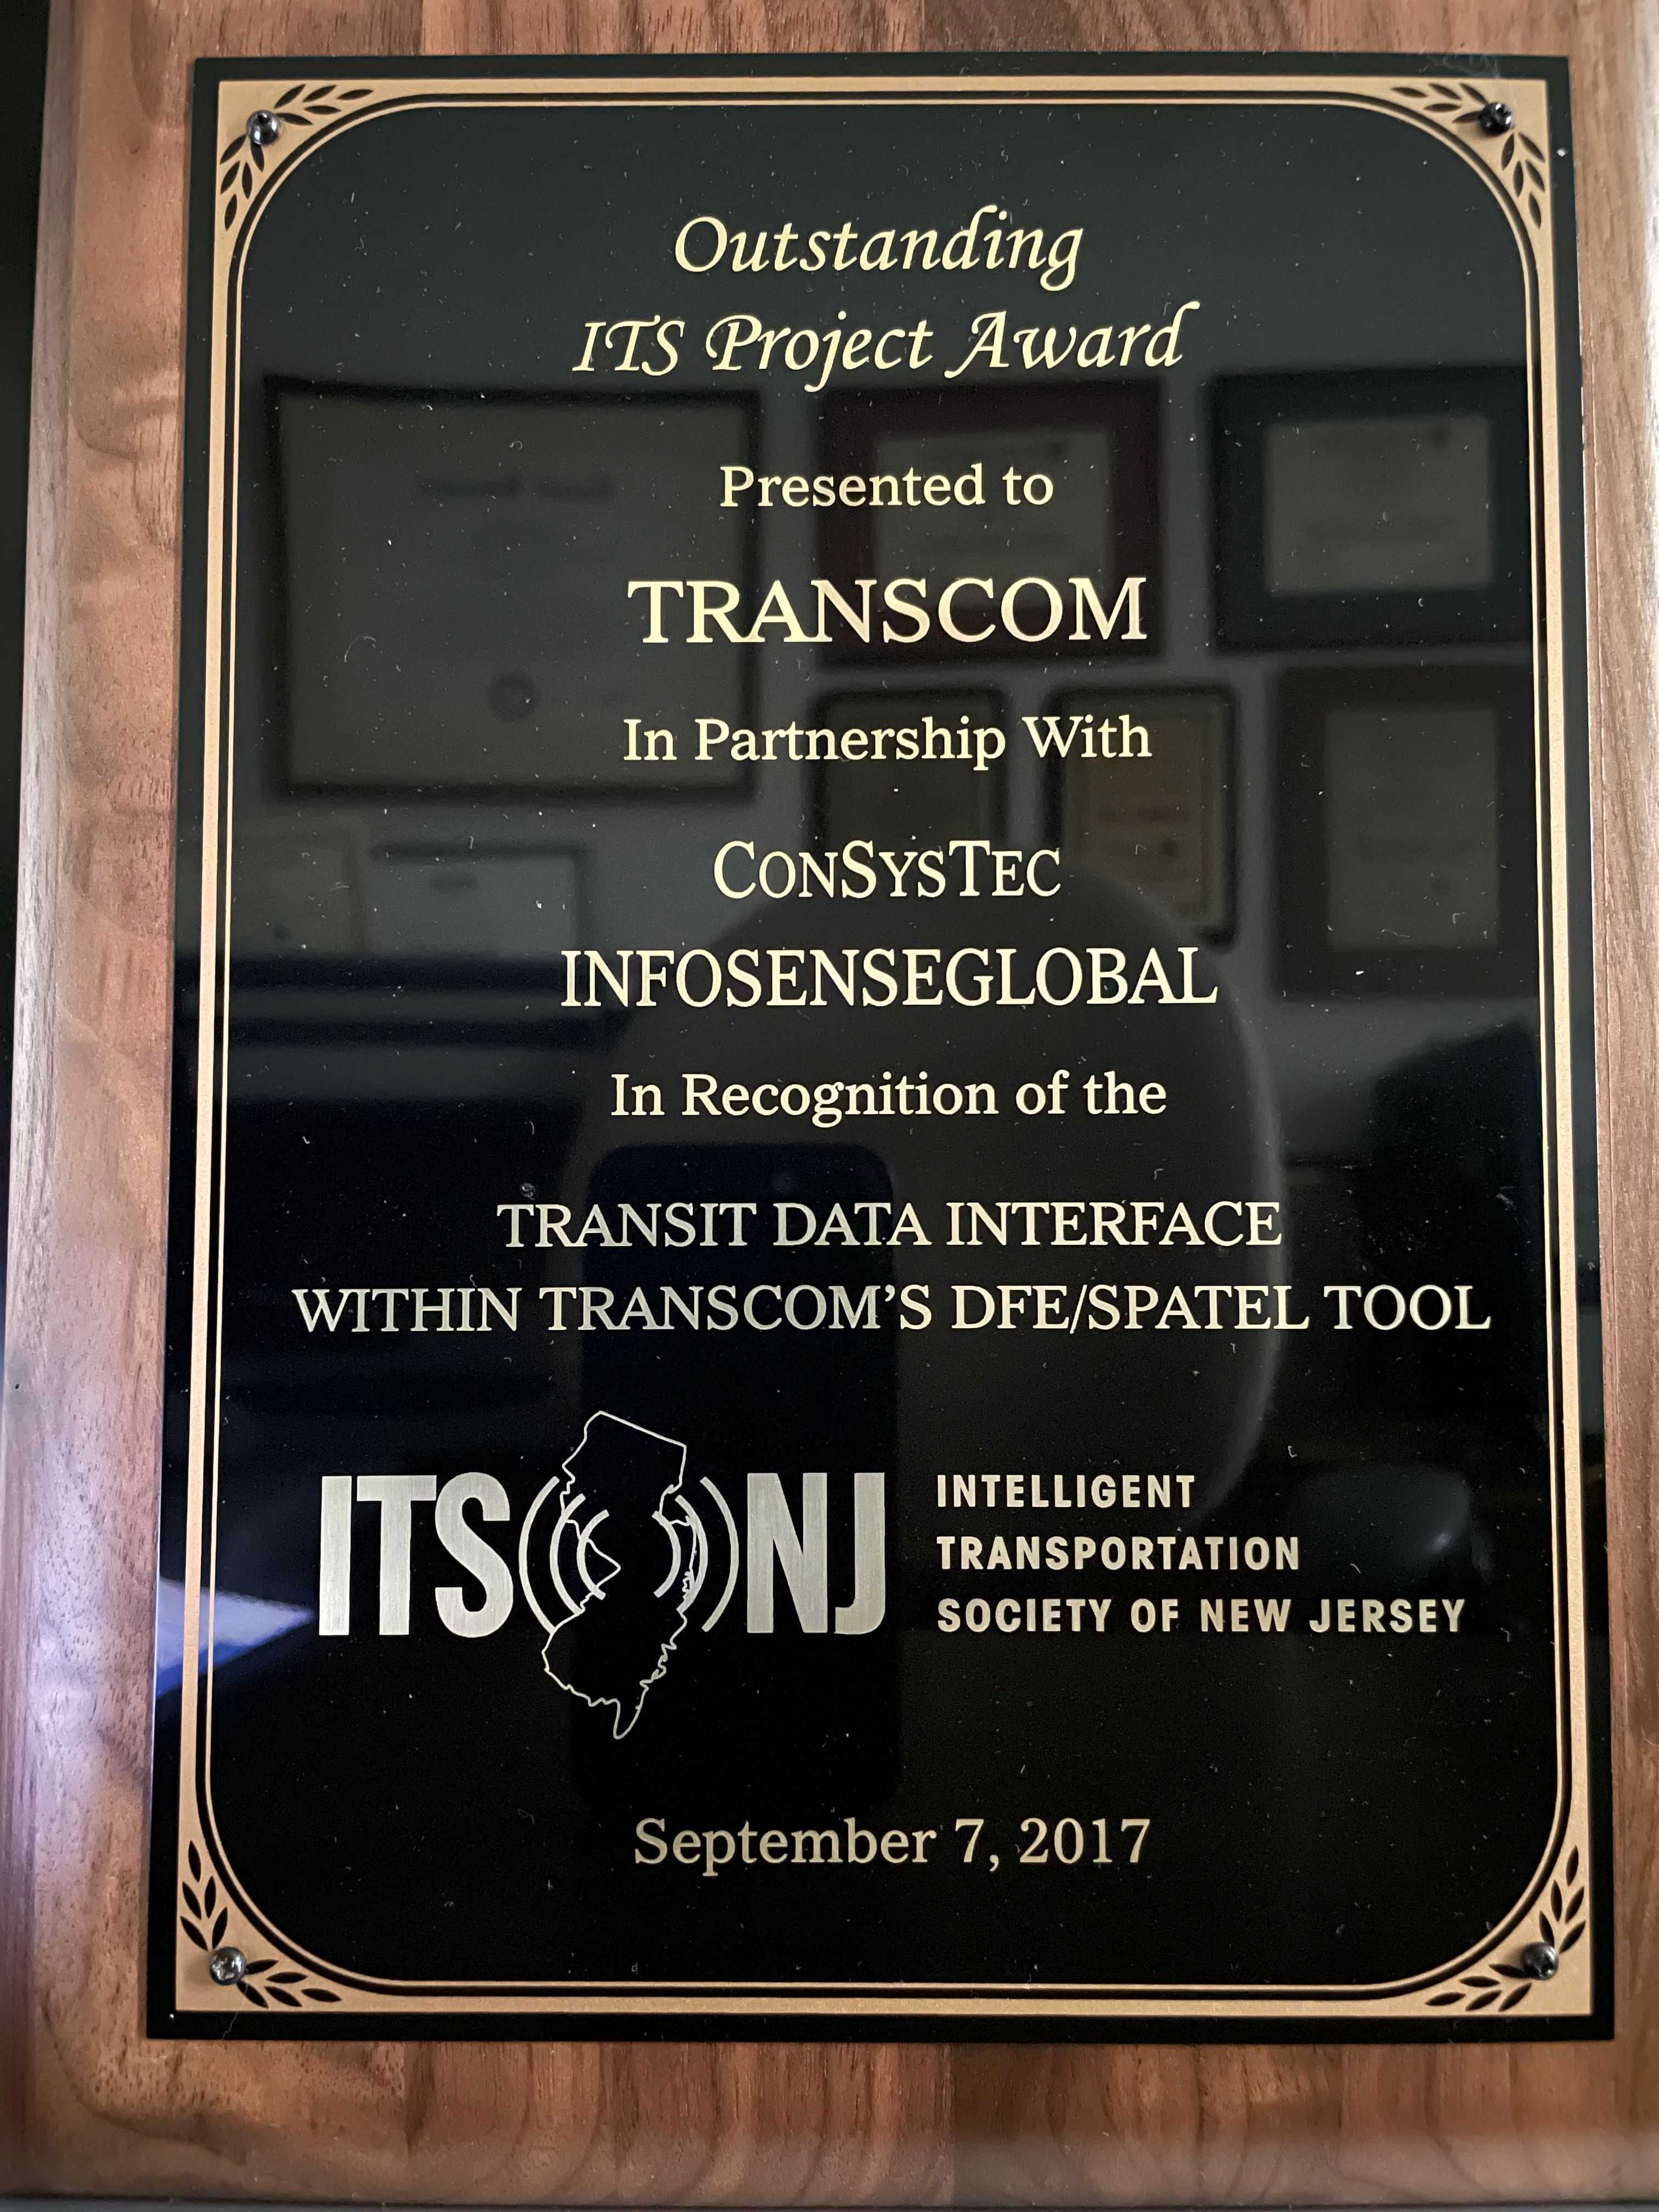 ITSNJ Transcom Transit Data Interface